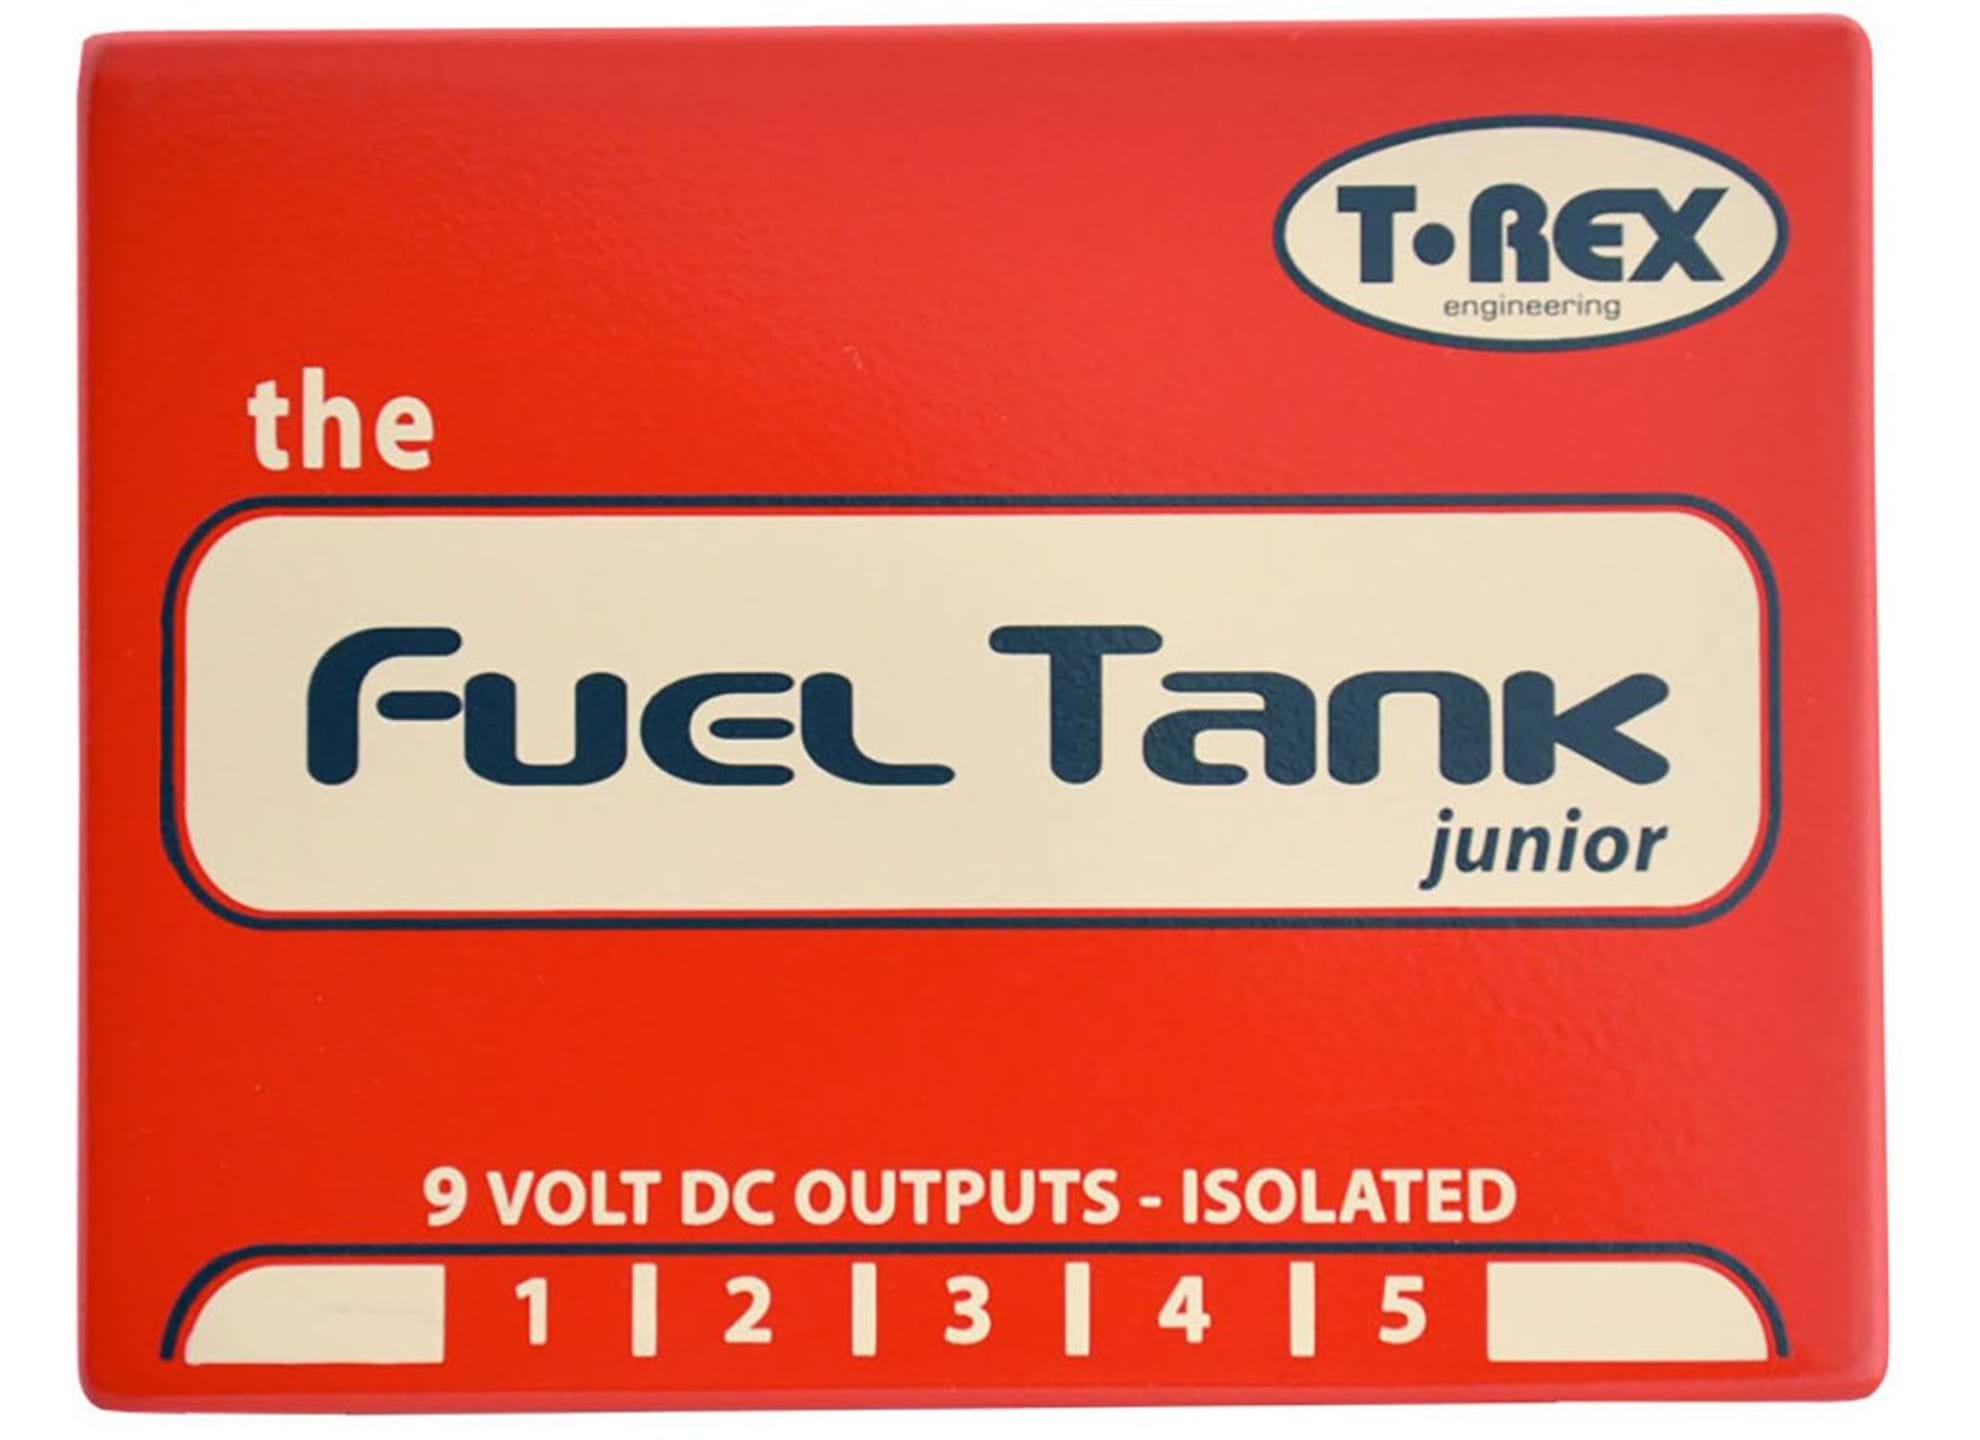 FuelTank Junior